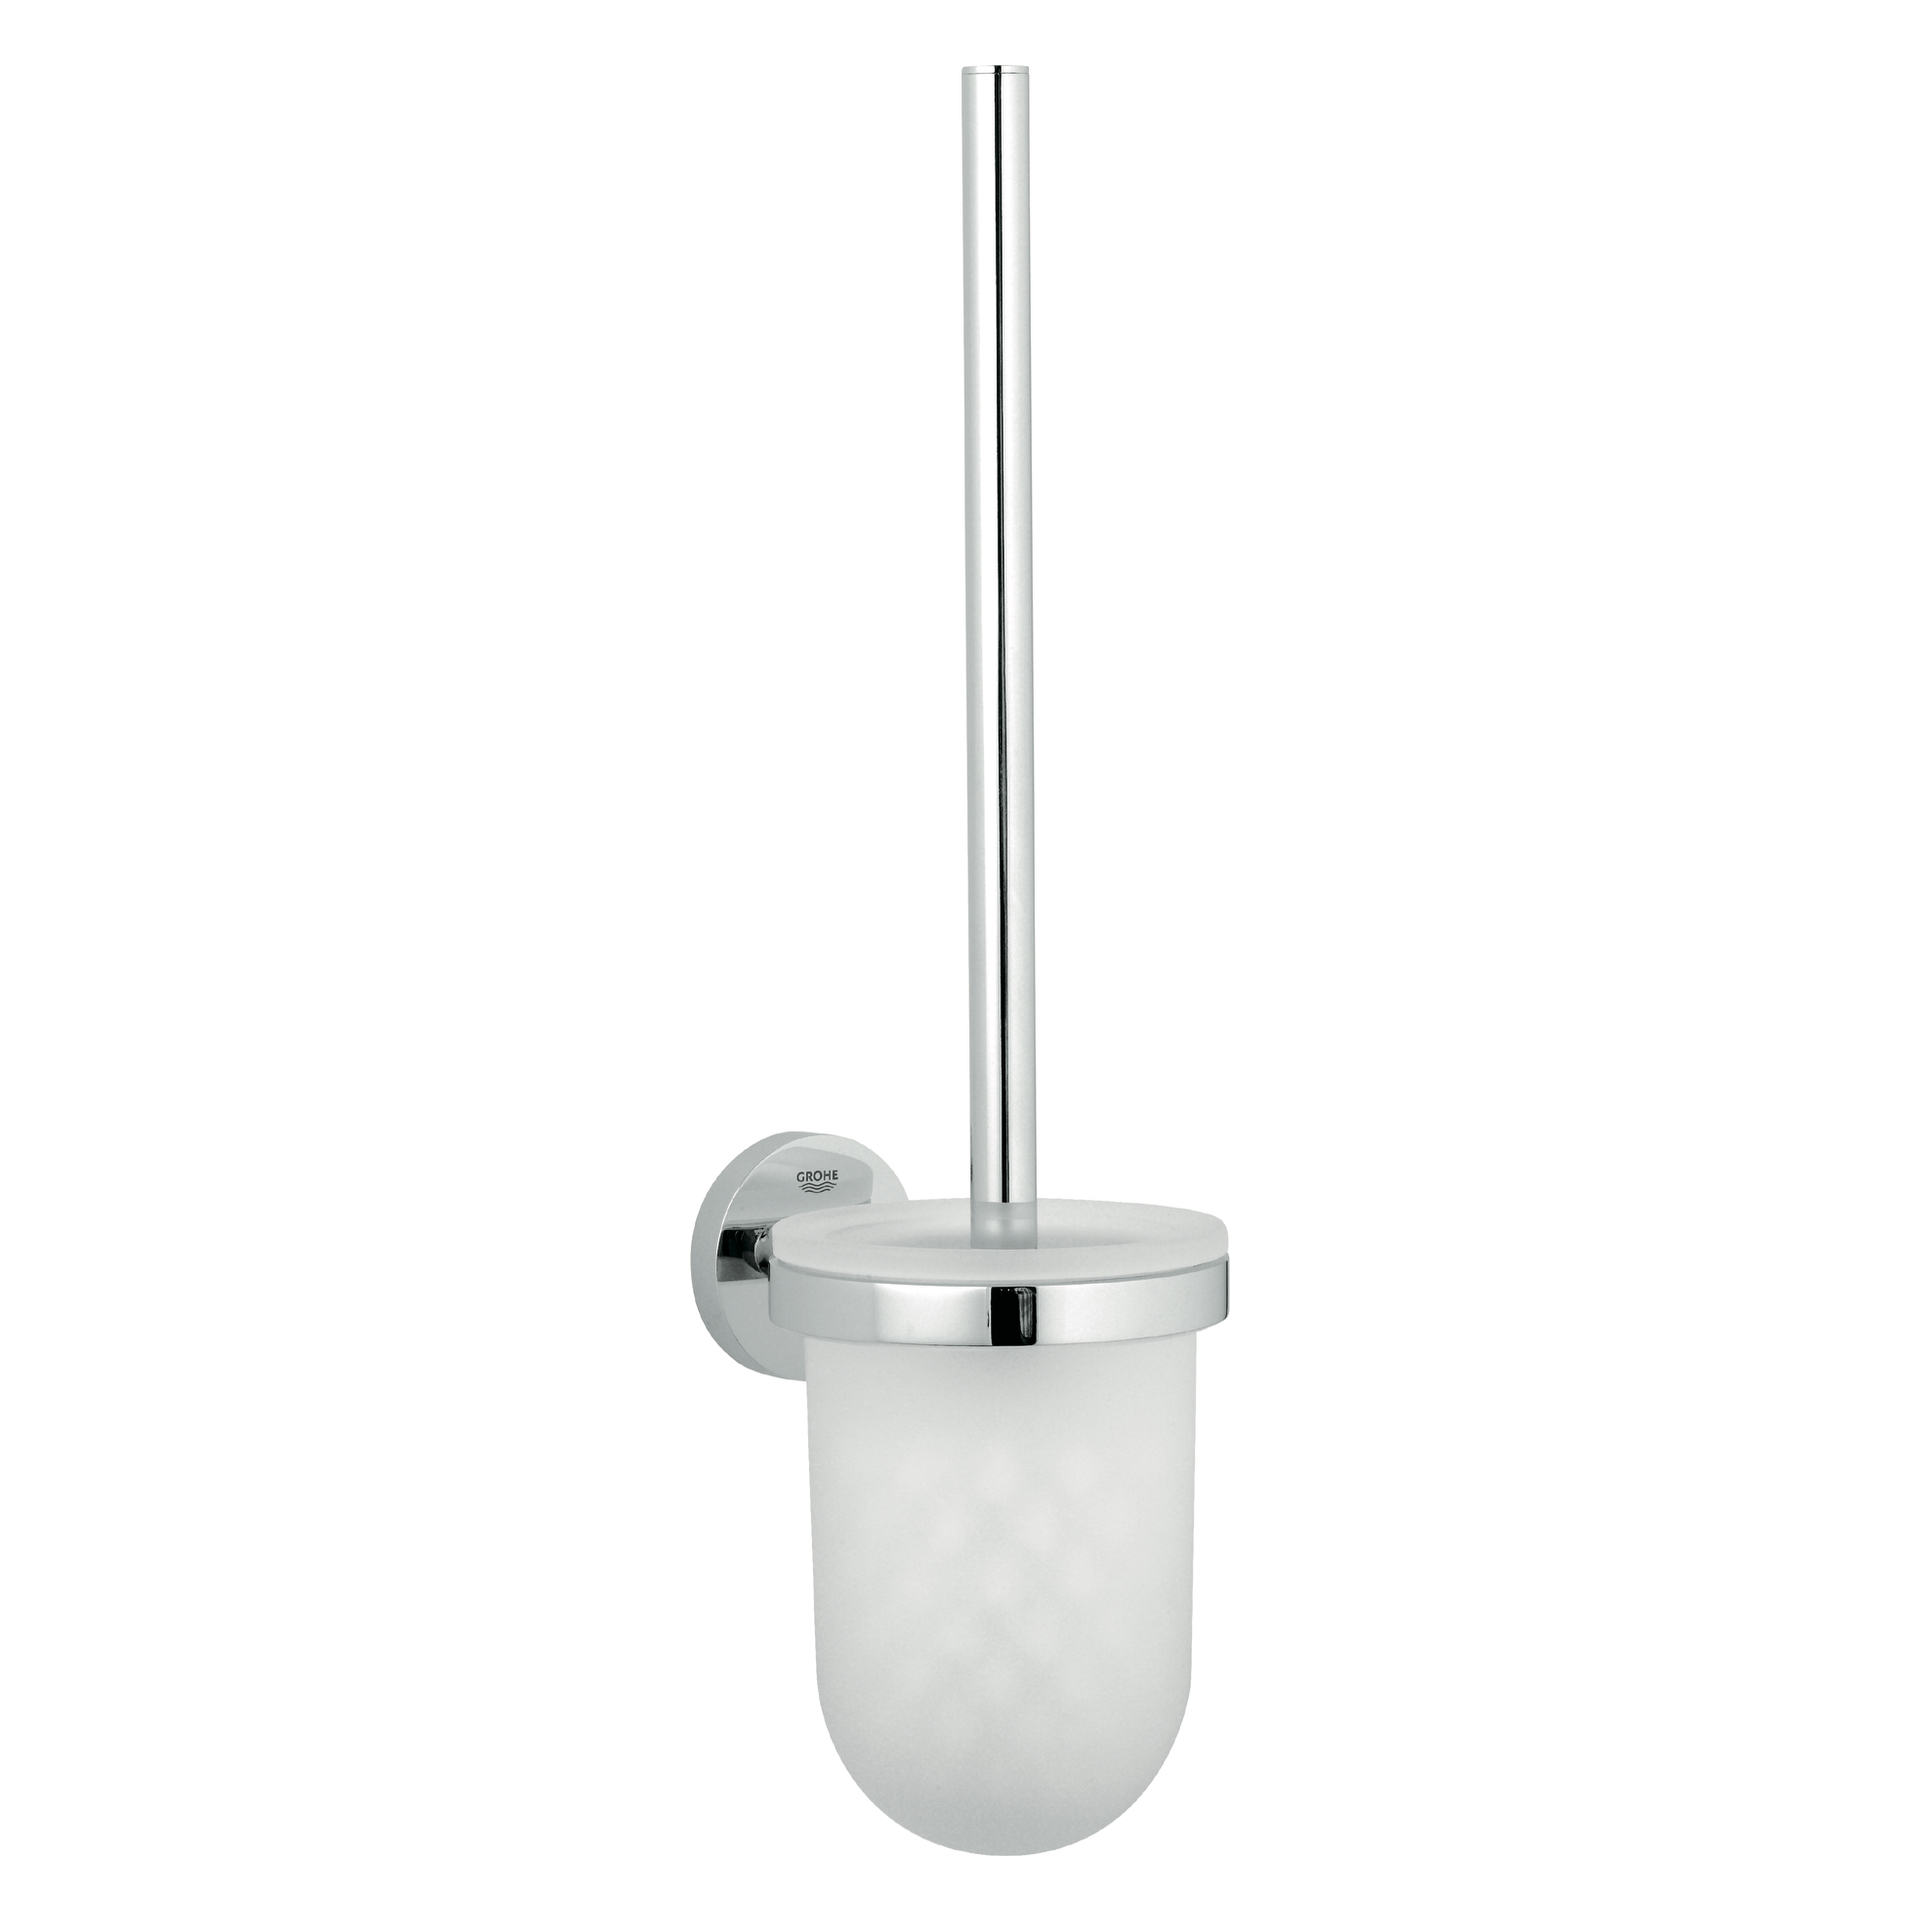 Toilettenbürstengarnitur Essentials 40374_1, Material Glas/Metall, Wandmontage, chrom/glas